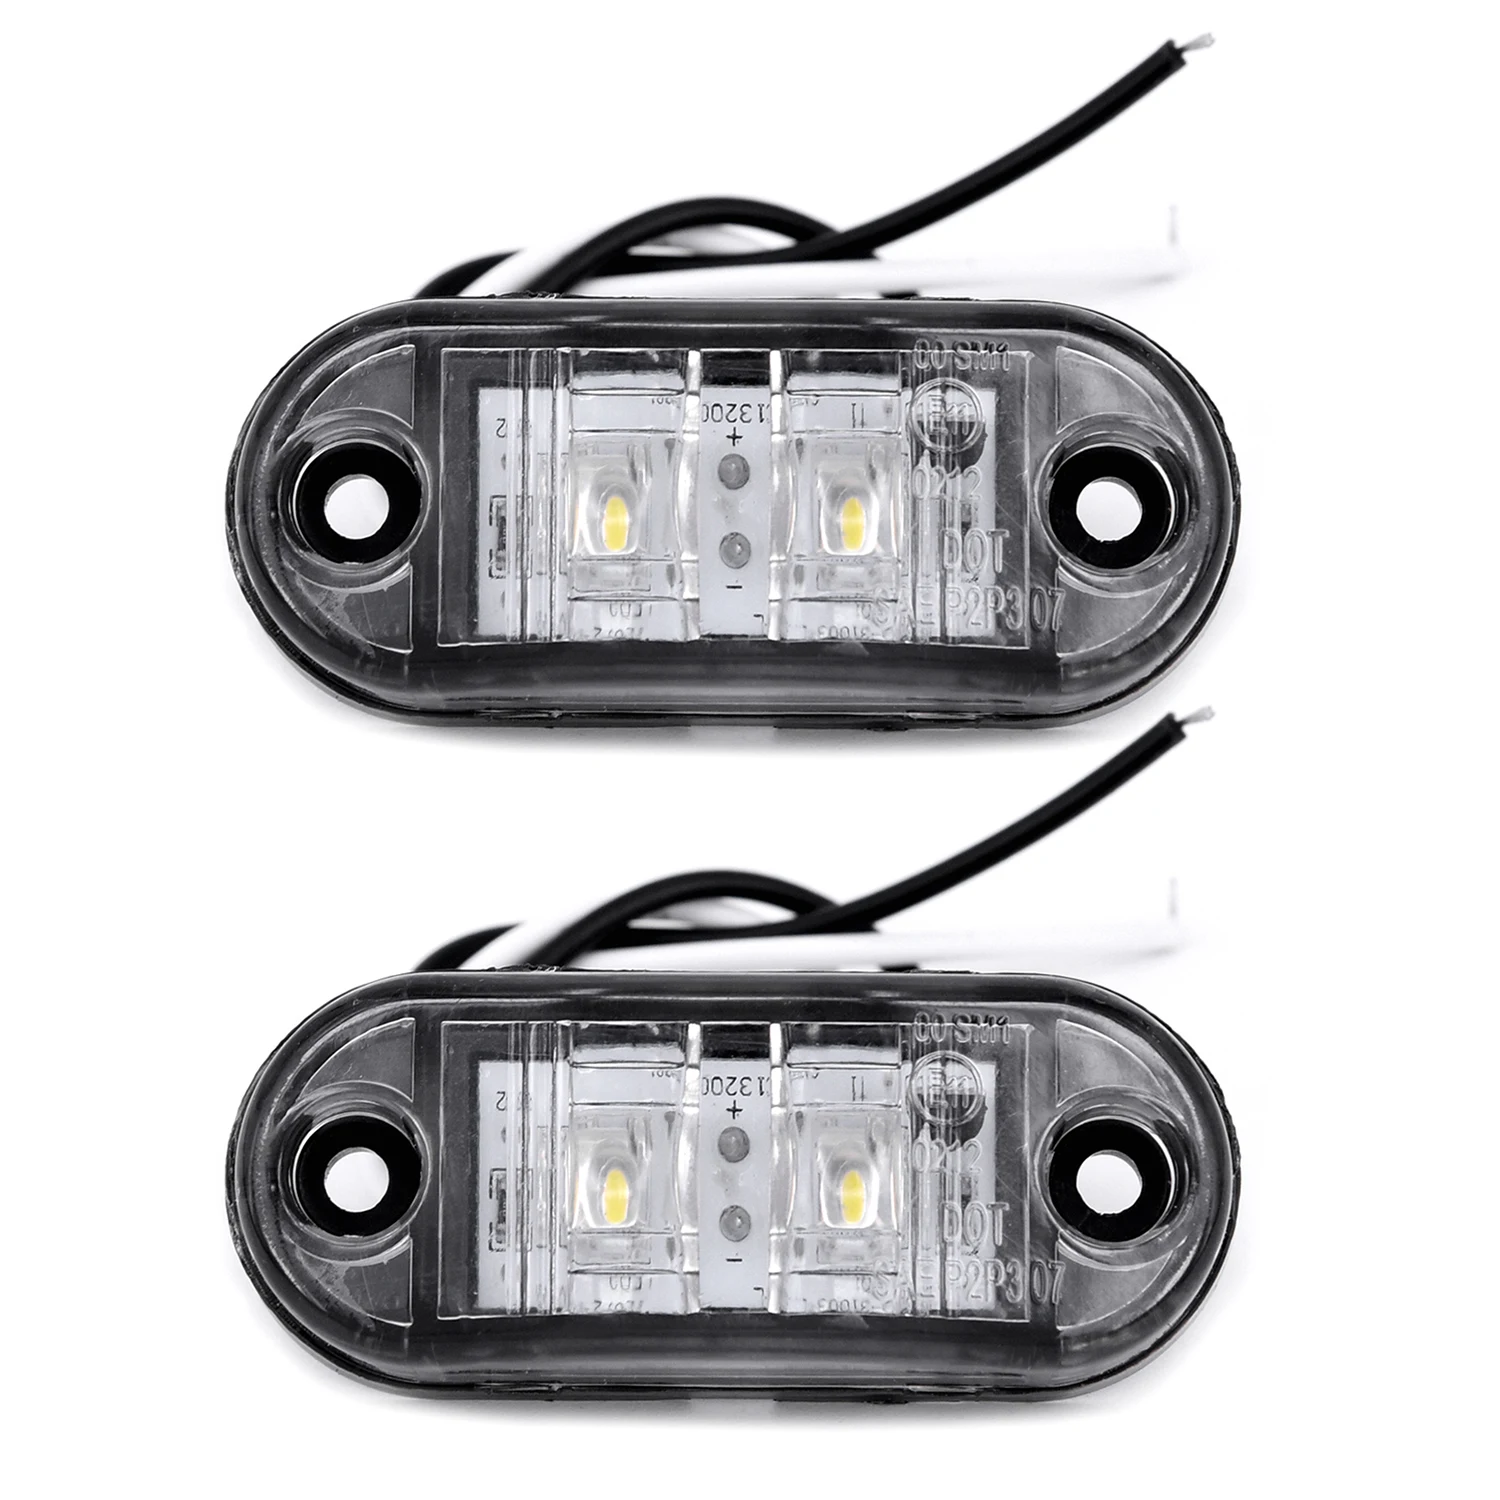 2Pcs Set White 12V LED Car Side Marker Tail Light 24V Trailer Truck Lamp E11 Marked Lights 66*28*18 Mm IP65 Waterproof images - 6